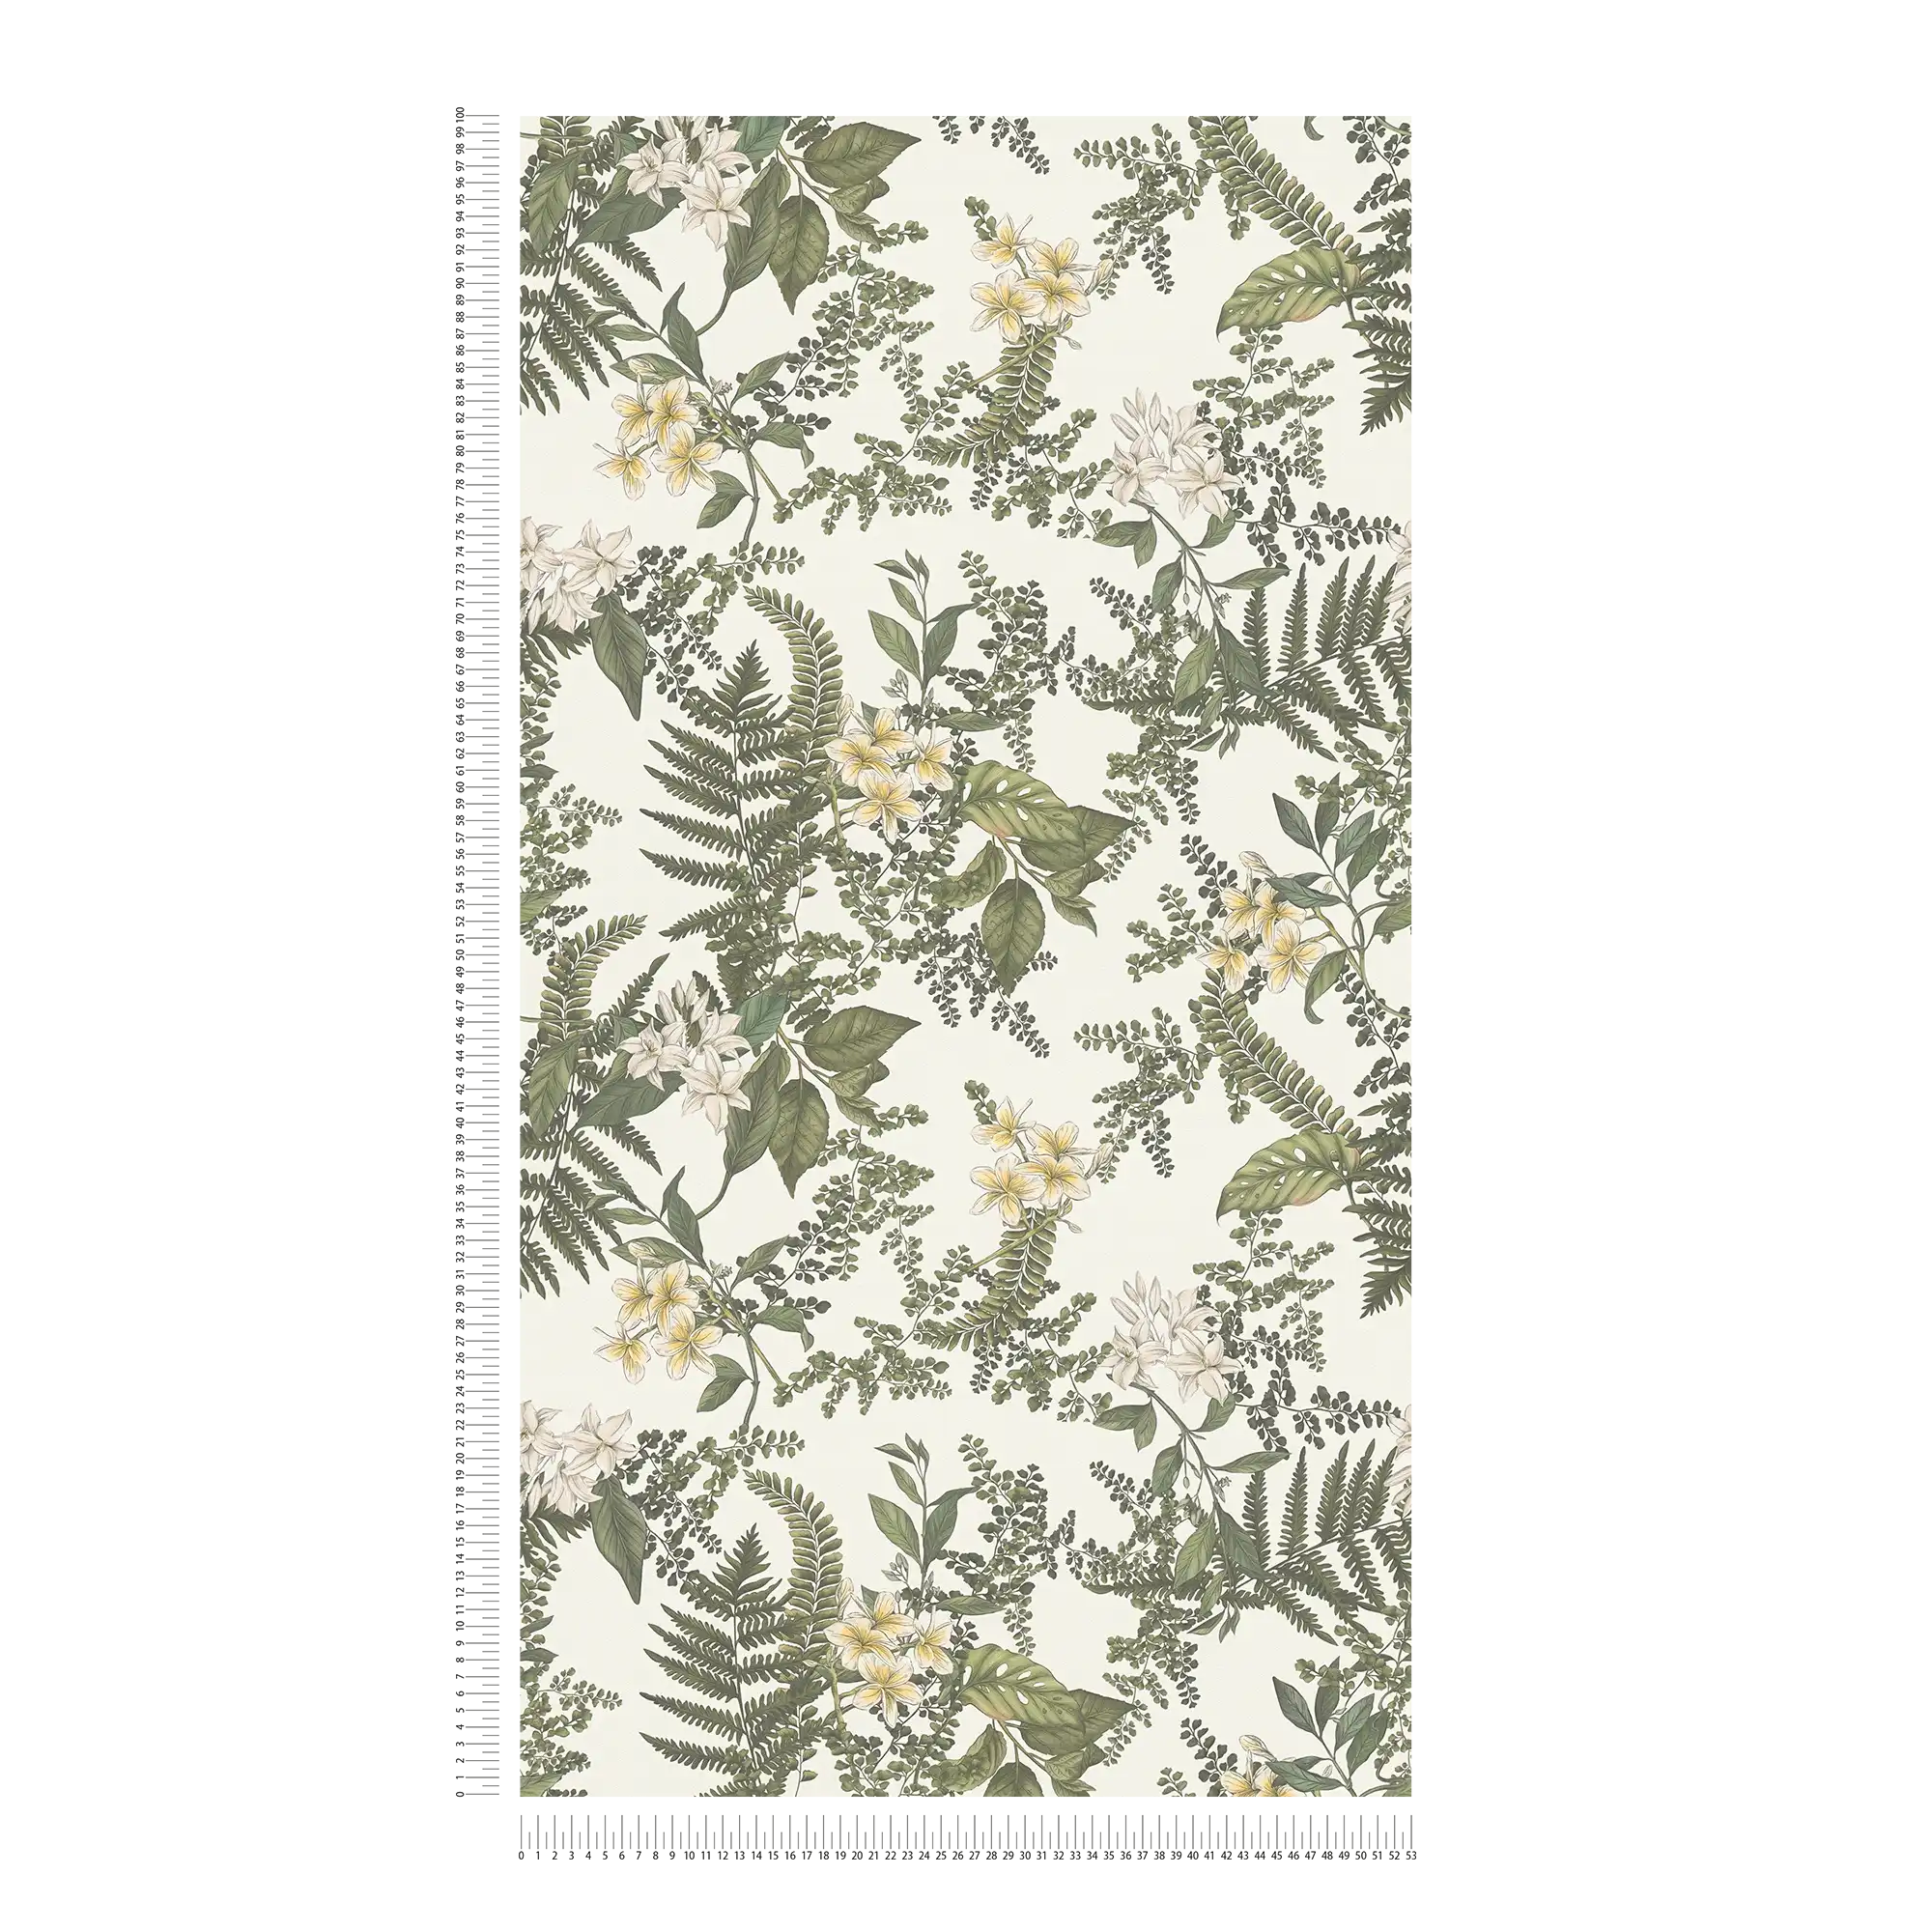             Floral wallpaper modern with flowers & grasses textured matt - white, dark green, yellow
        